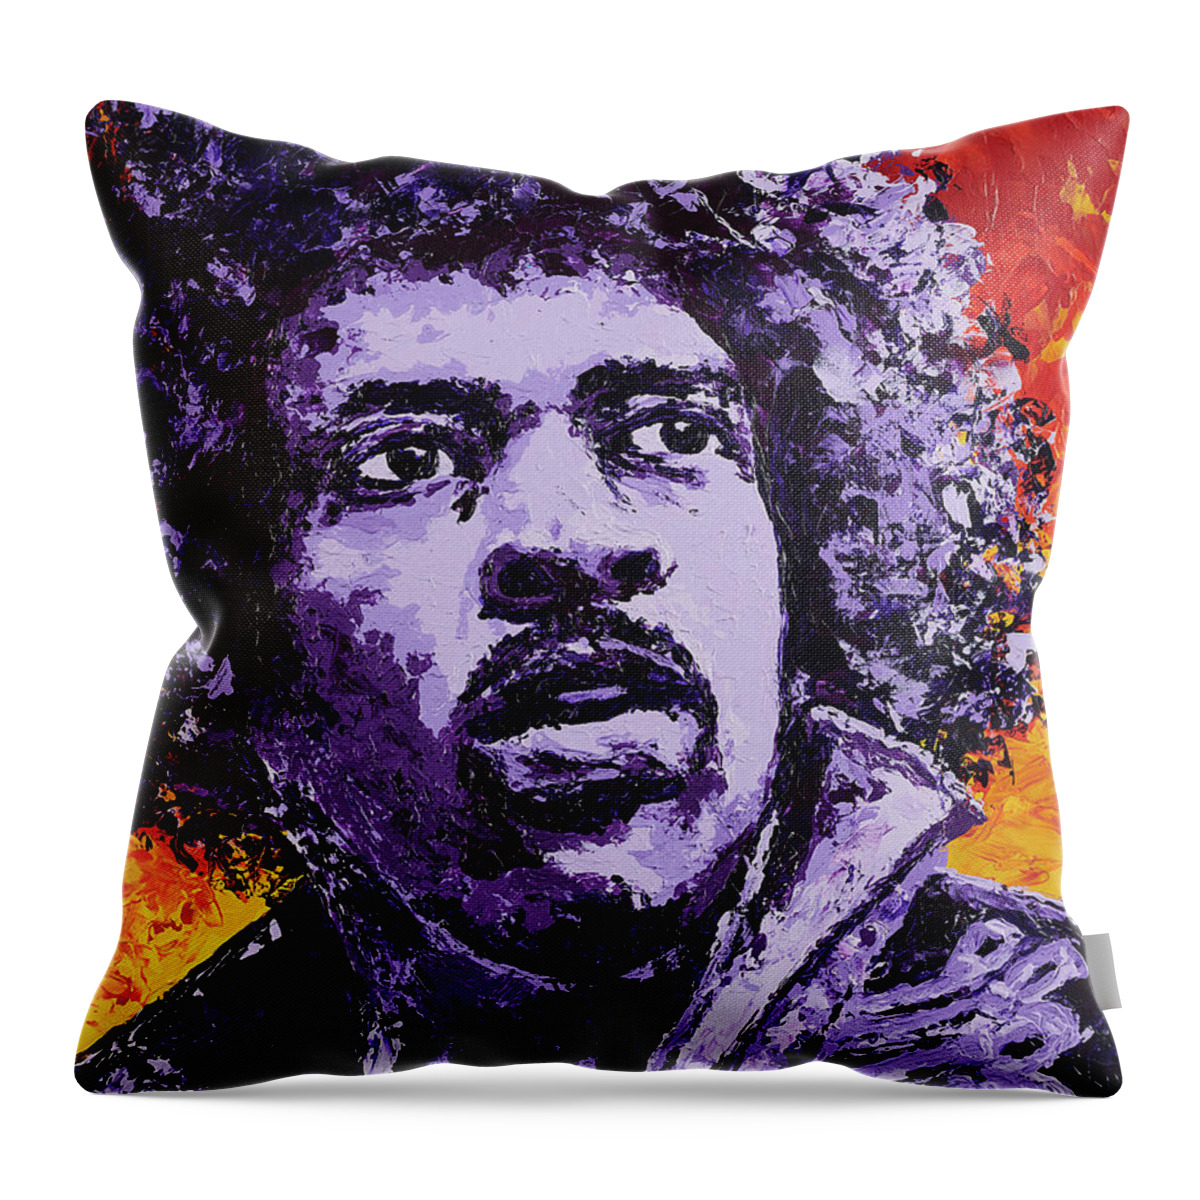 Jimi Hendrix Throw Pillow featuring the painting Jimi Hendrix FIRE by Steve Follman